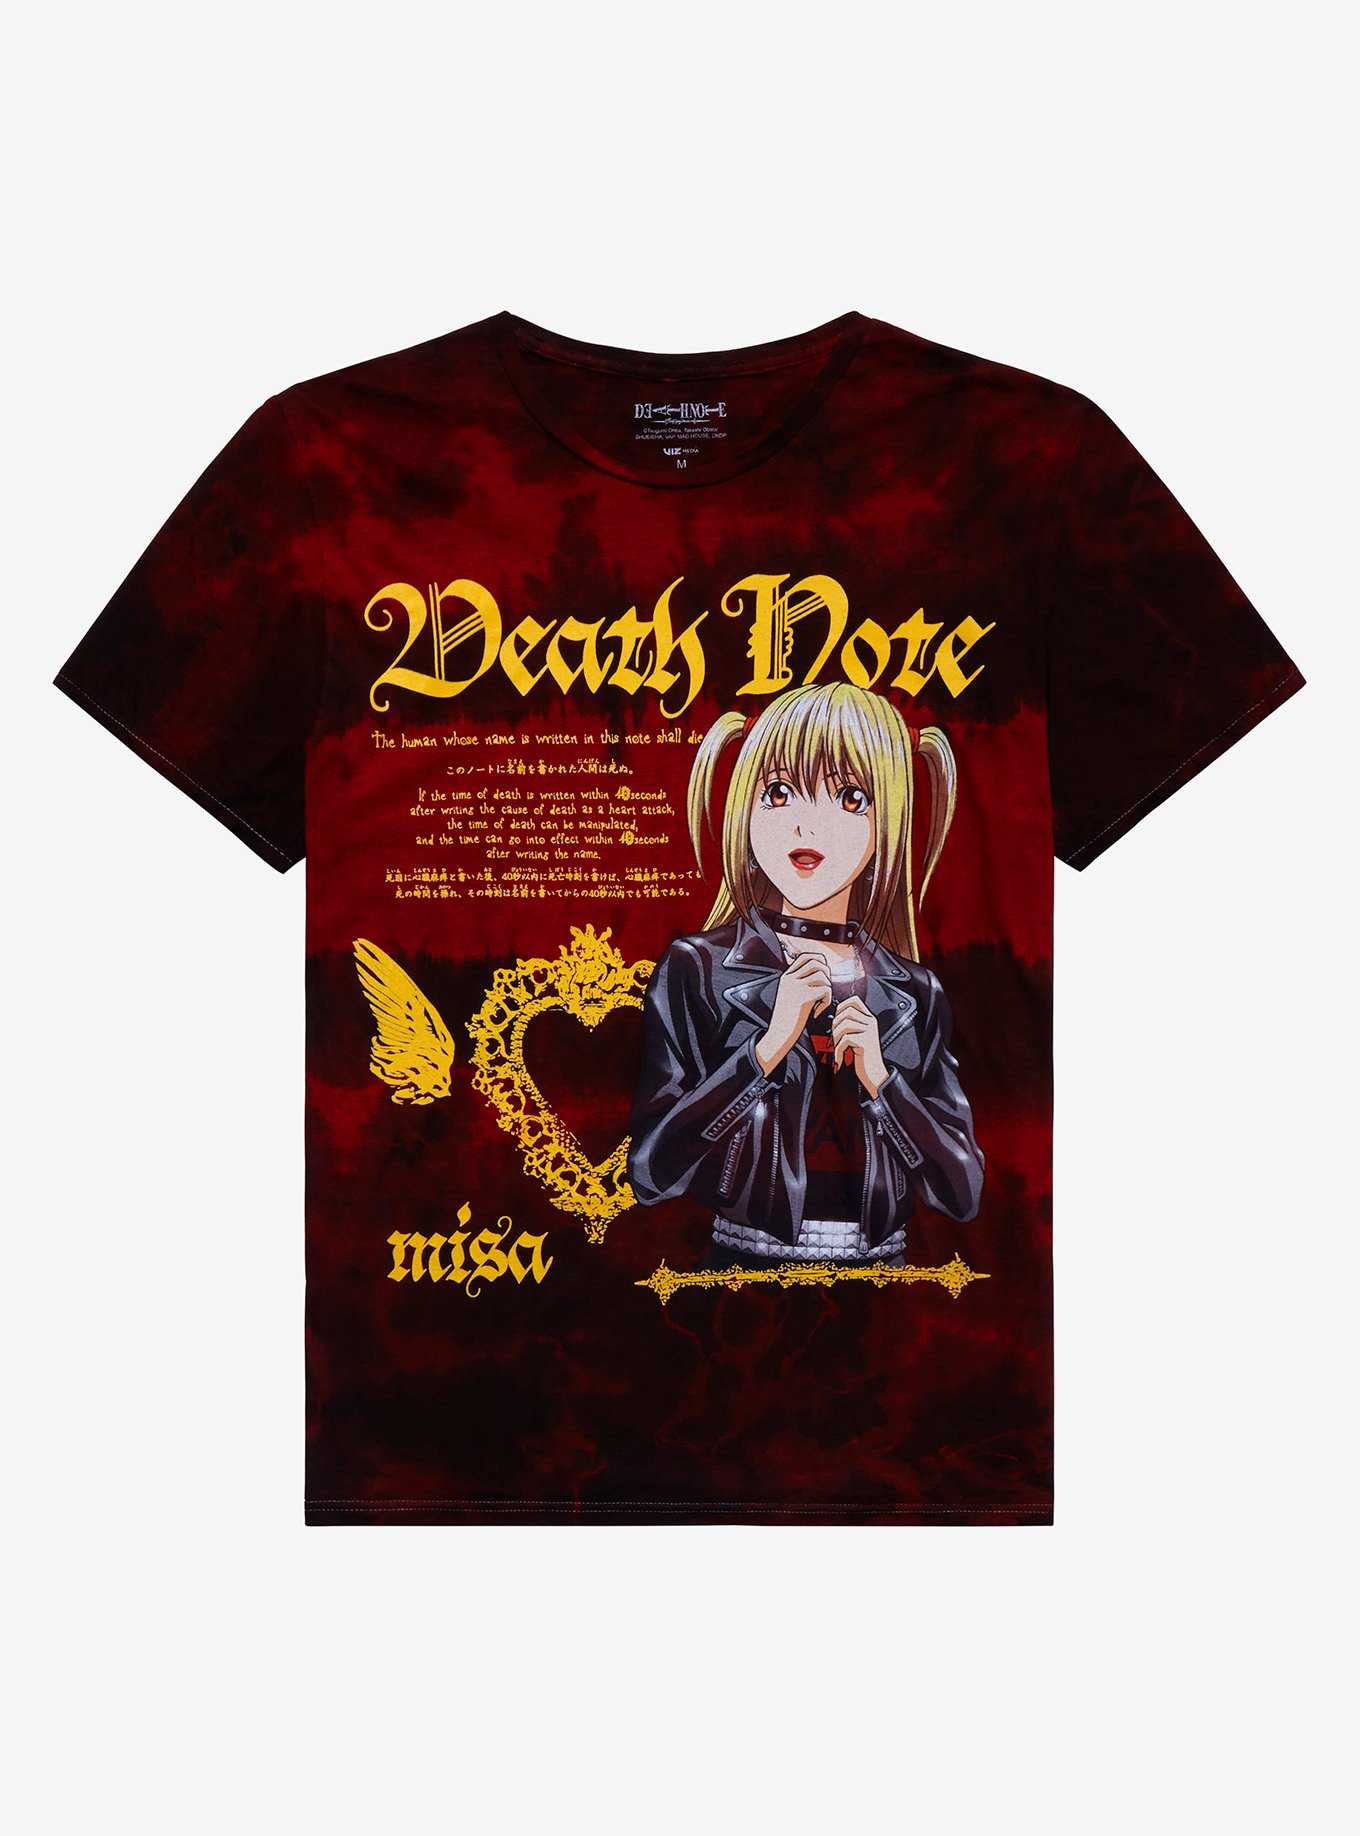 Death Note Misa Quote Tie-Dye T-Shirt, , hi-res